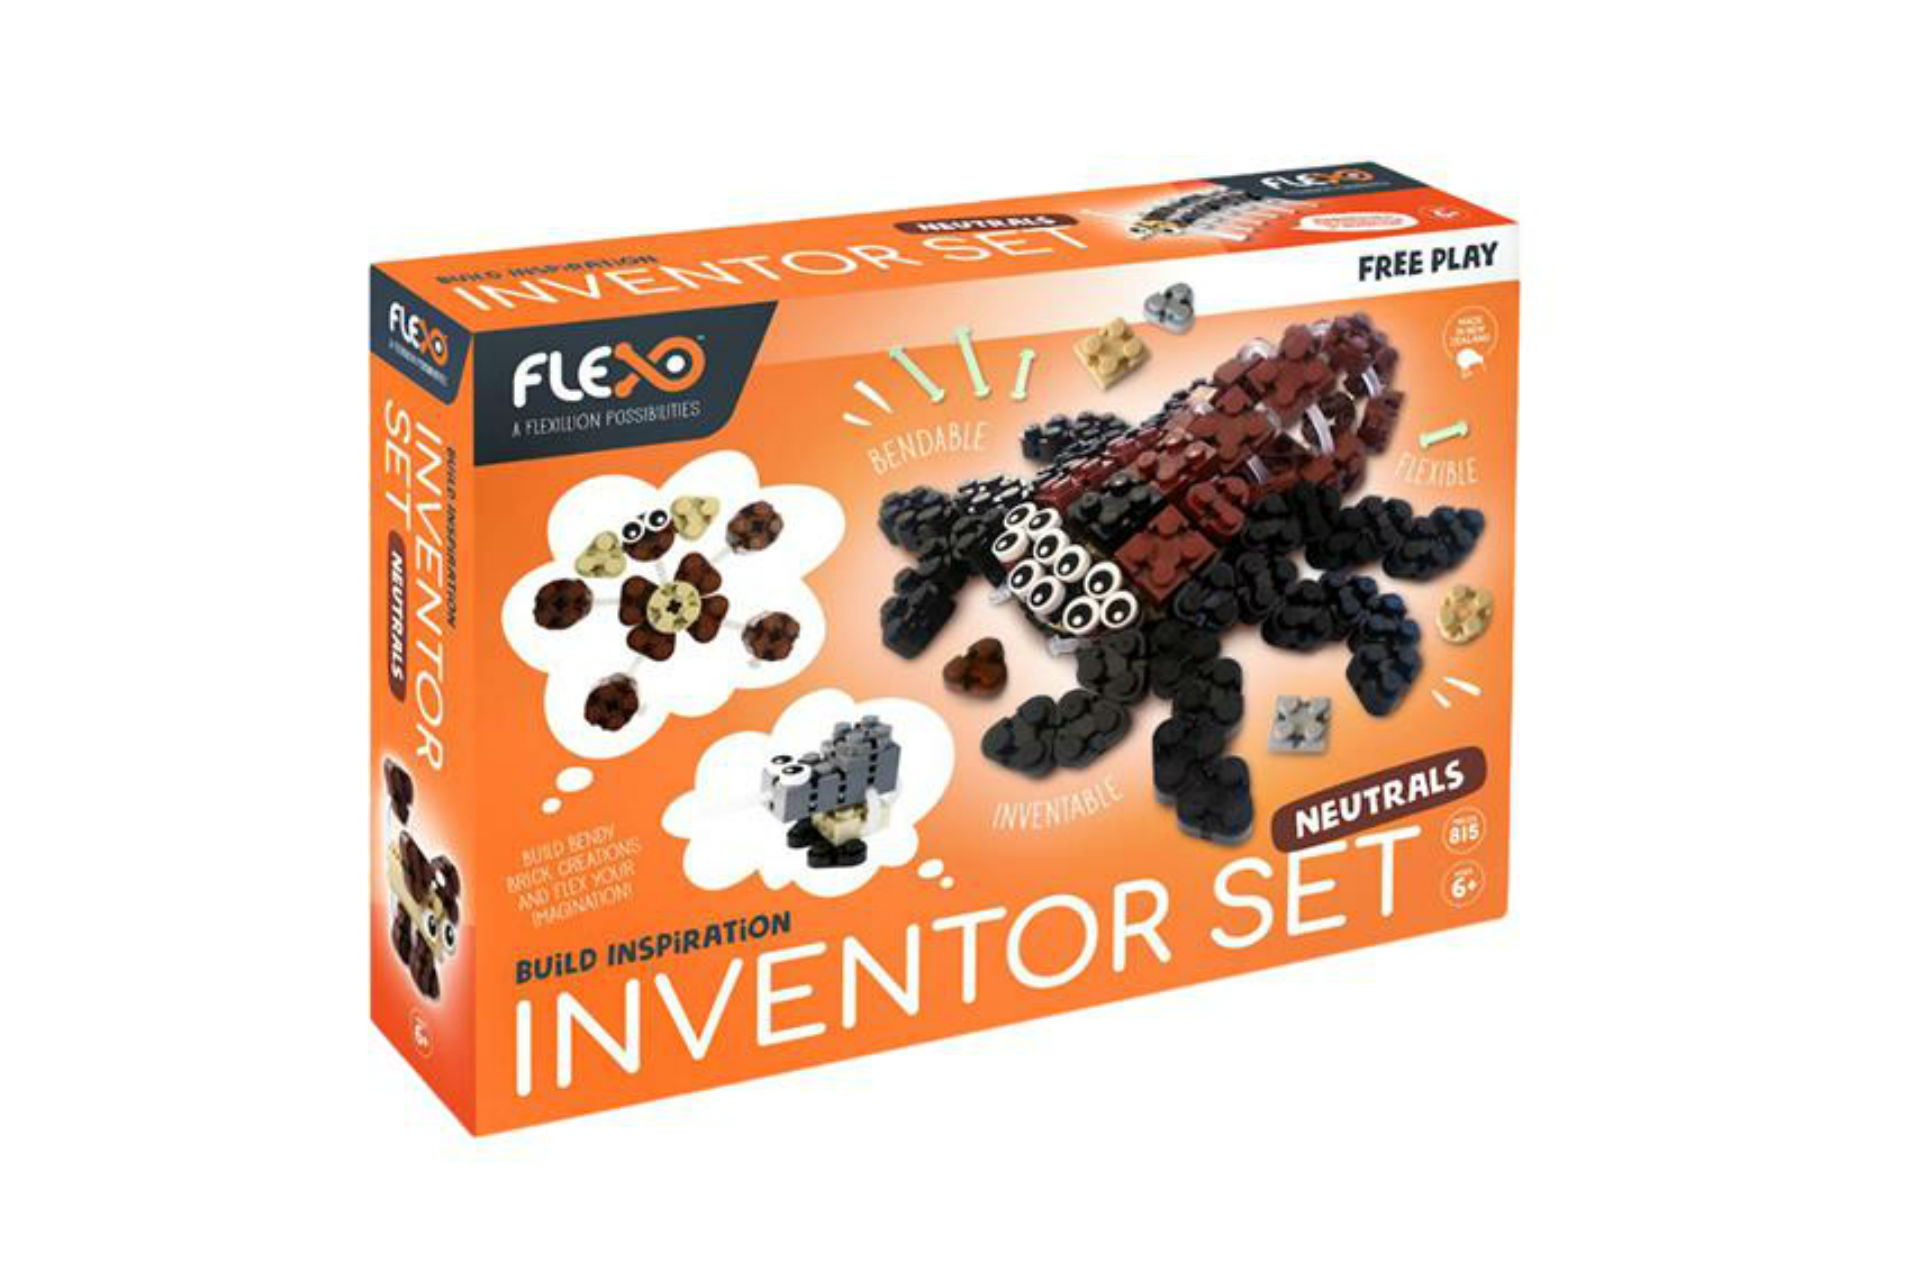 FLEXO Inventor Set